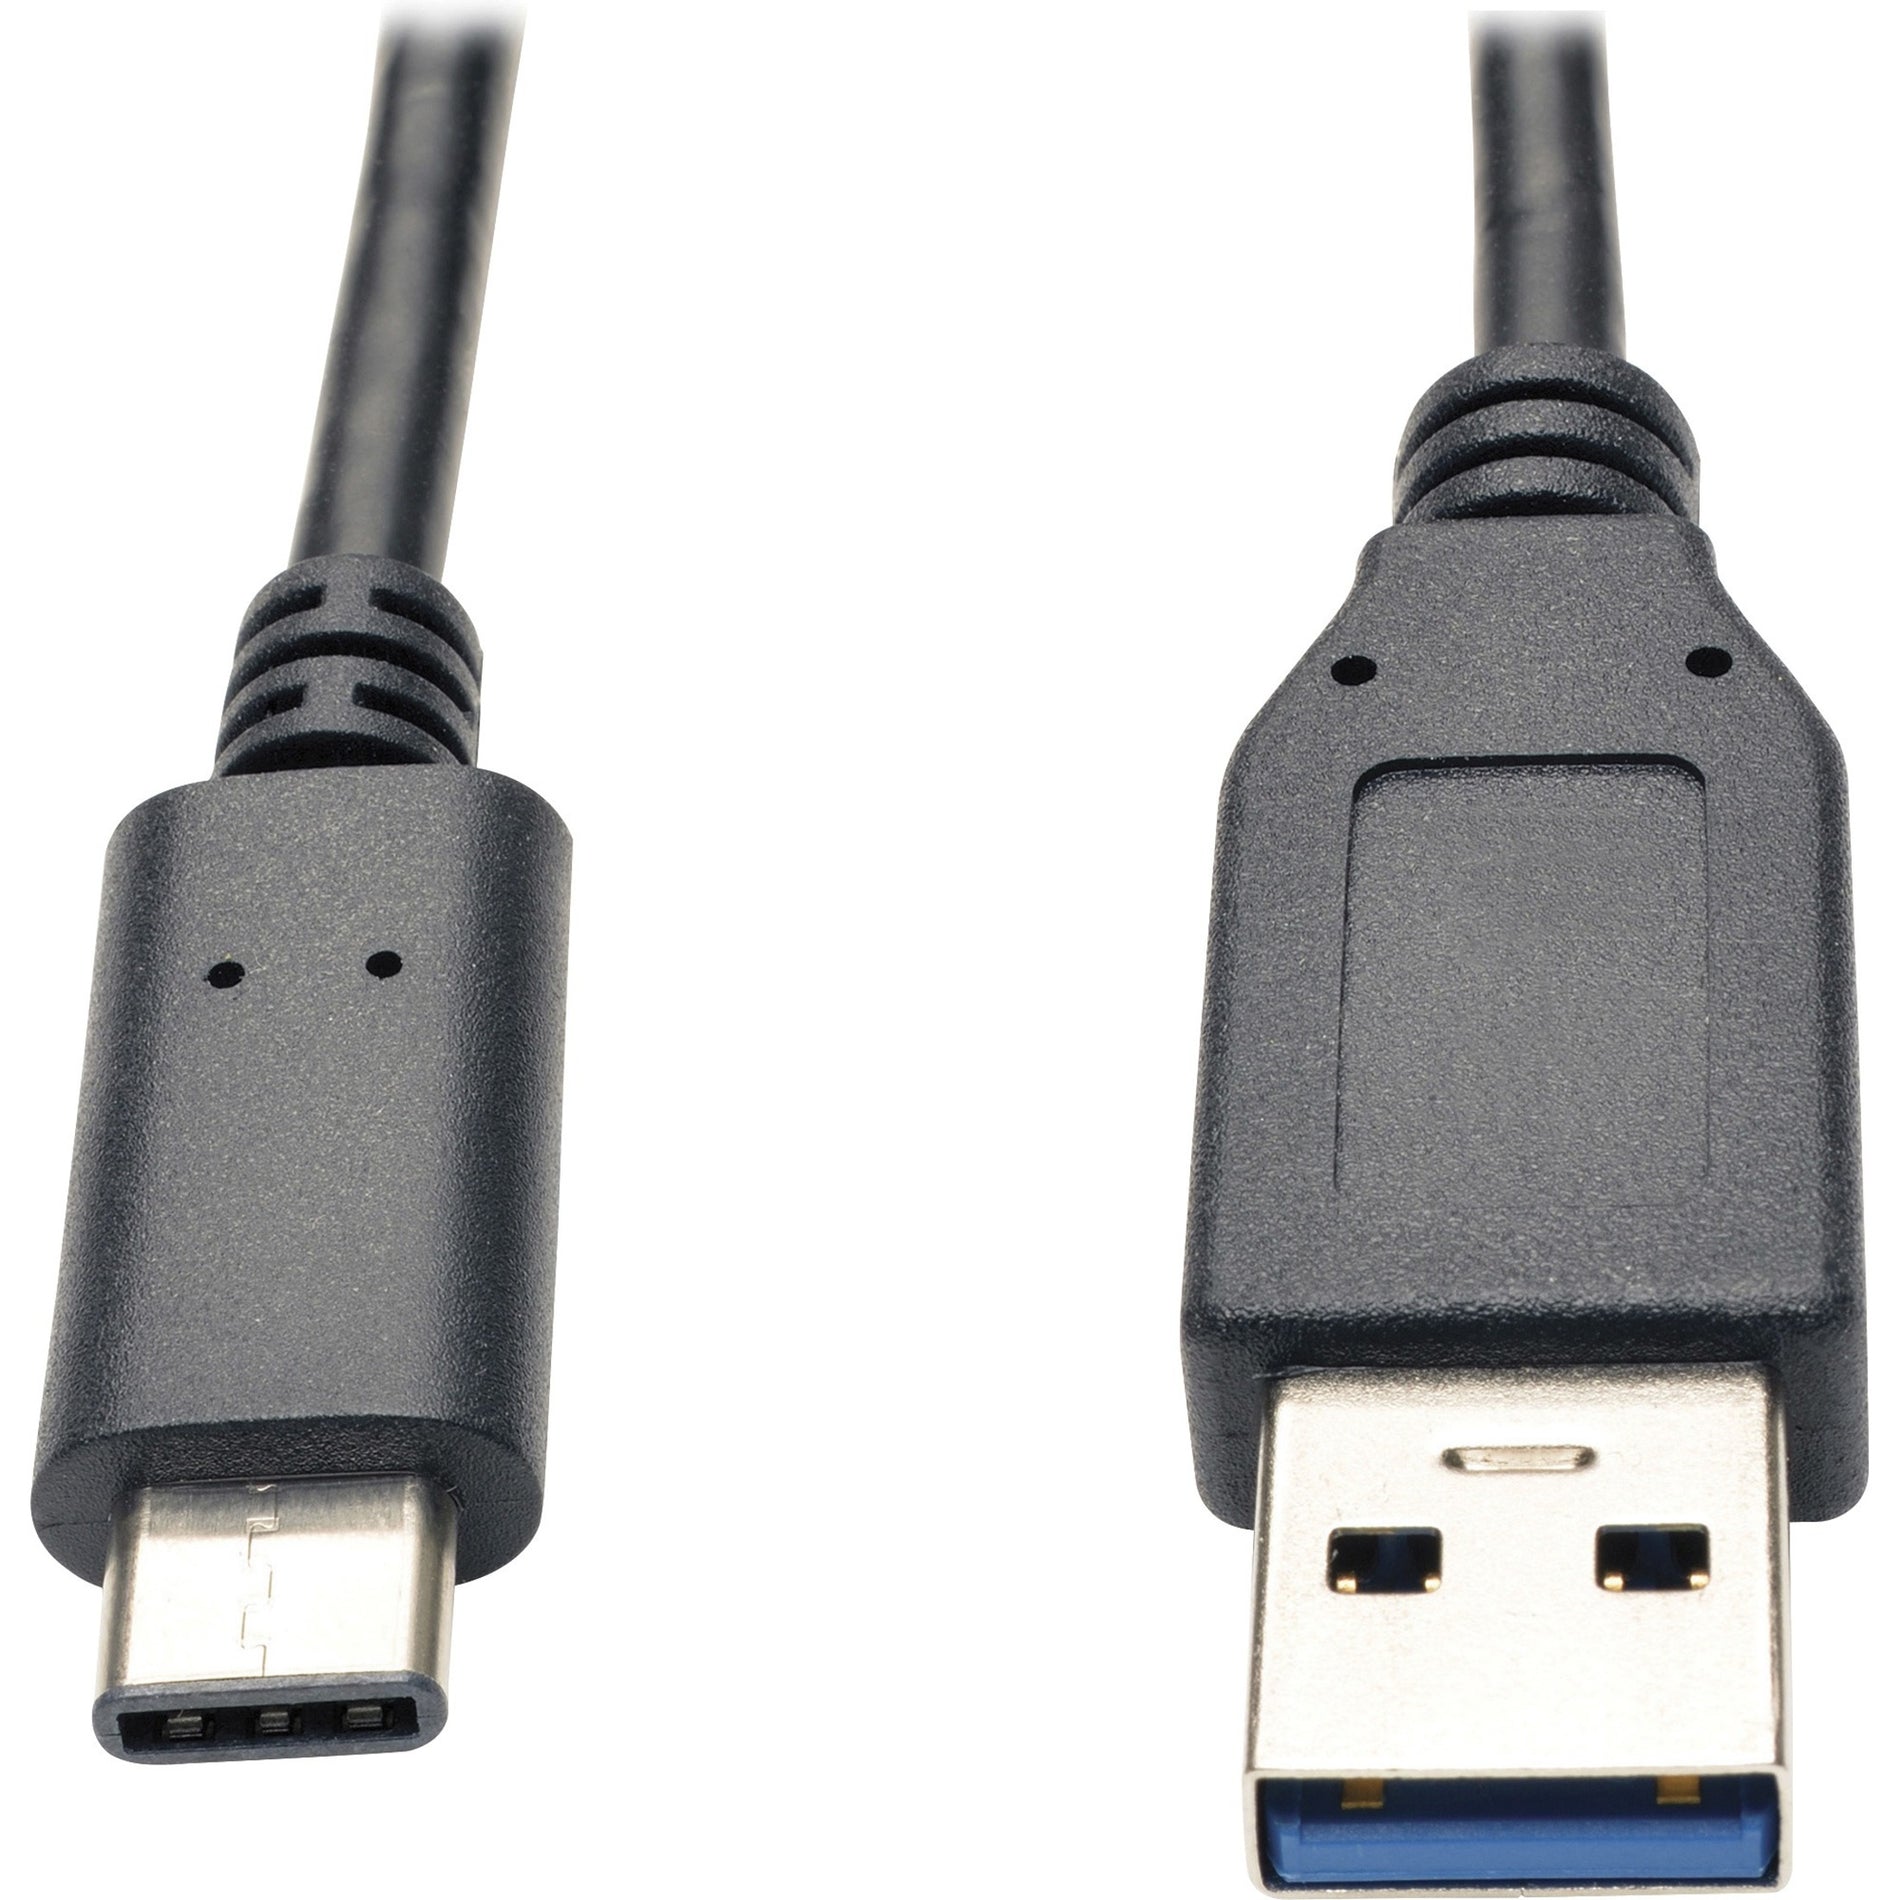 تريب لايت كابل نقل البيانات USB U428-003 ، USB 3.1 Type-C إلى USB Type-A M/M 3-FT.